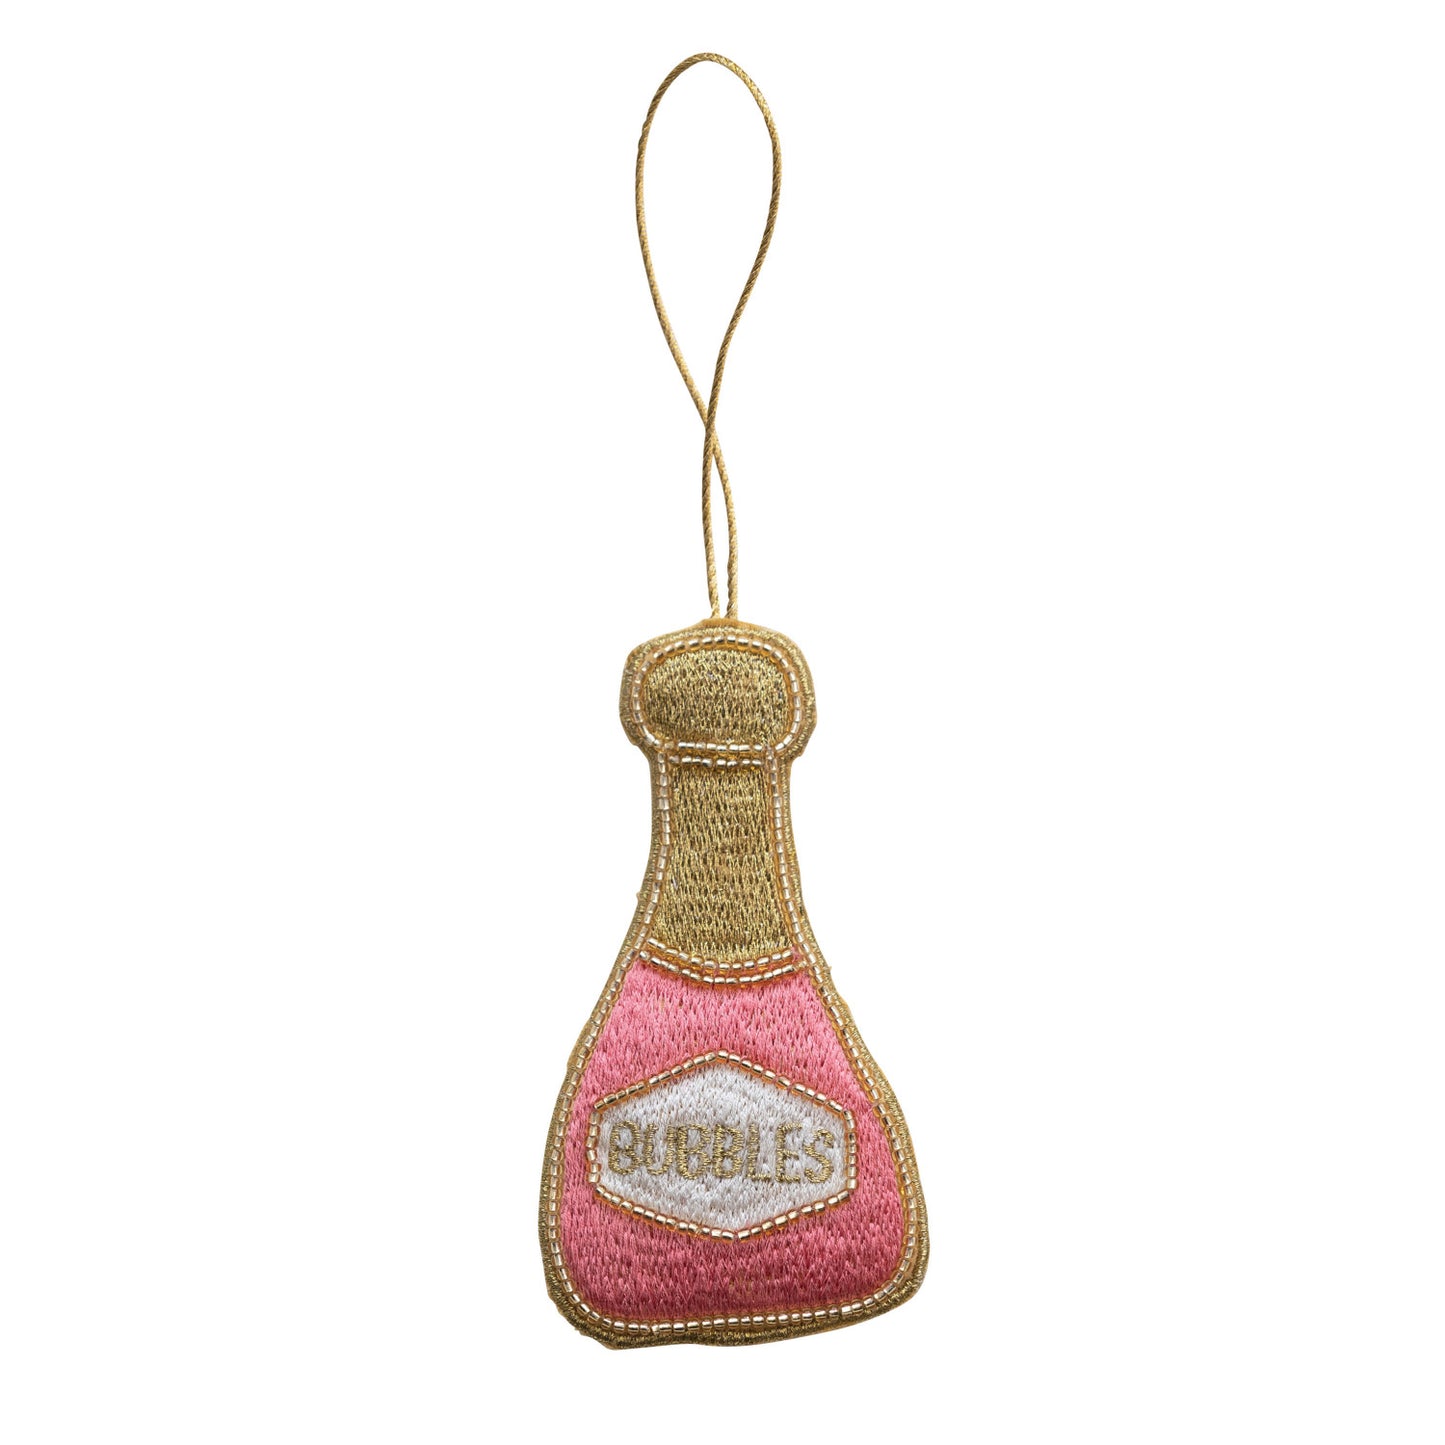 Fabric Champagne Bottle Ornament